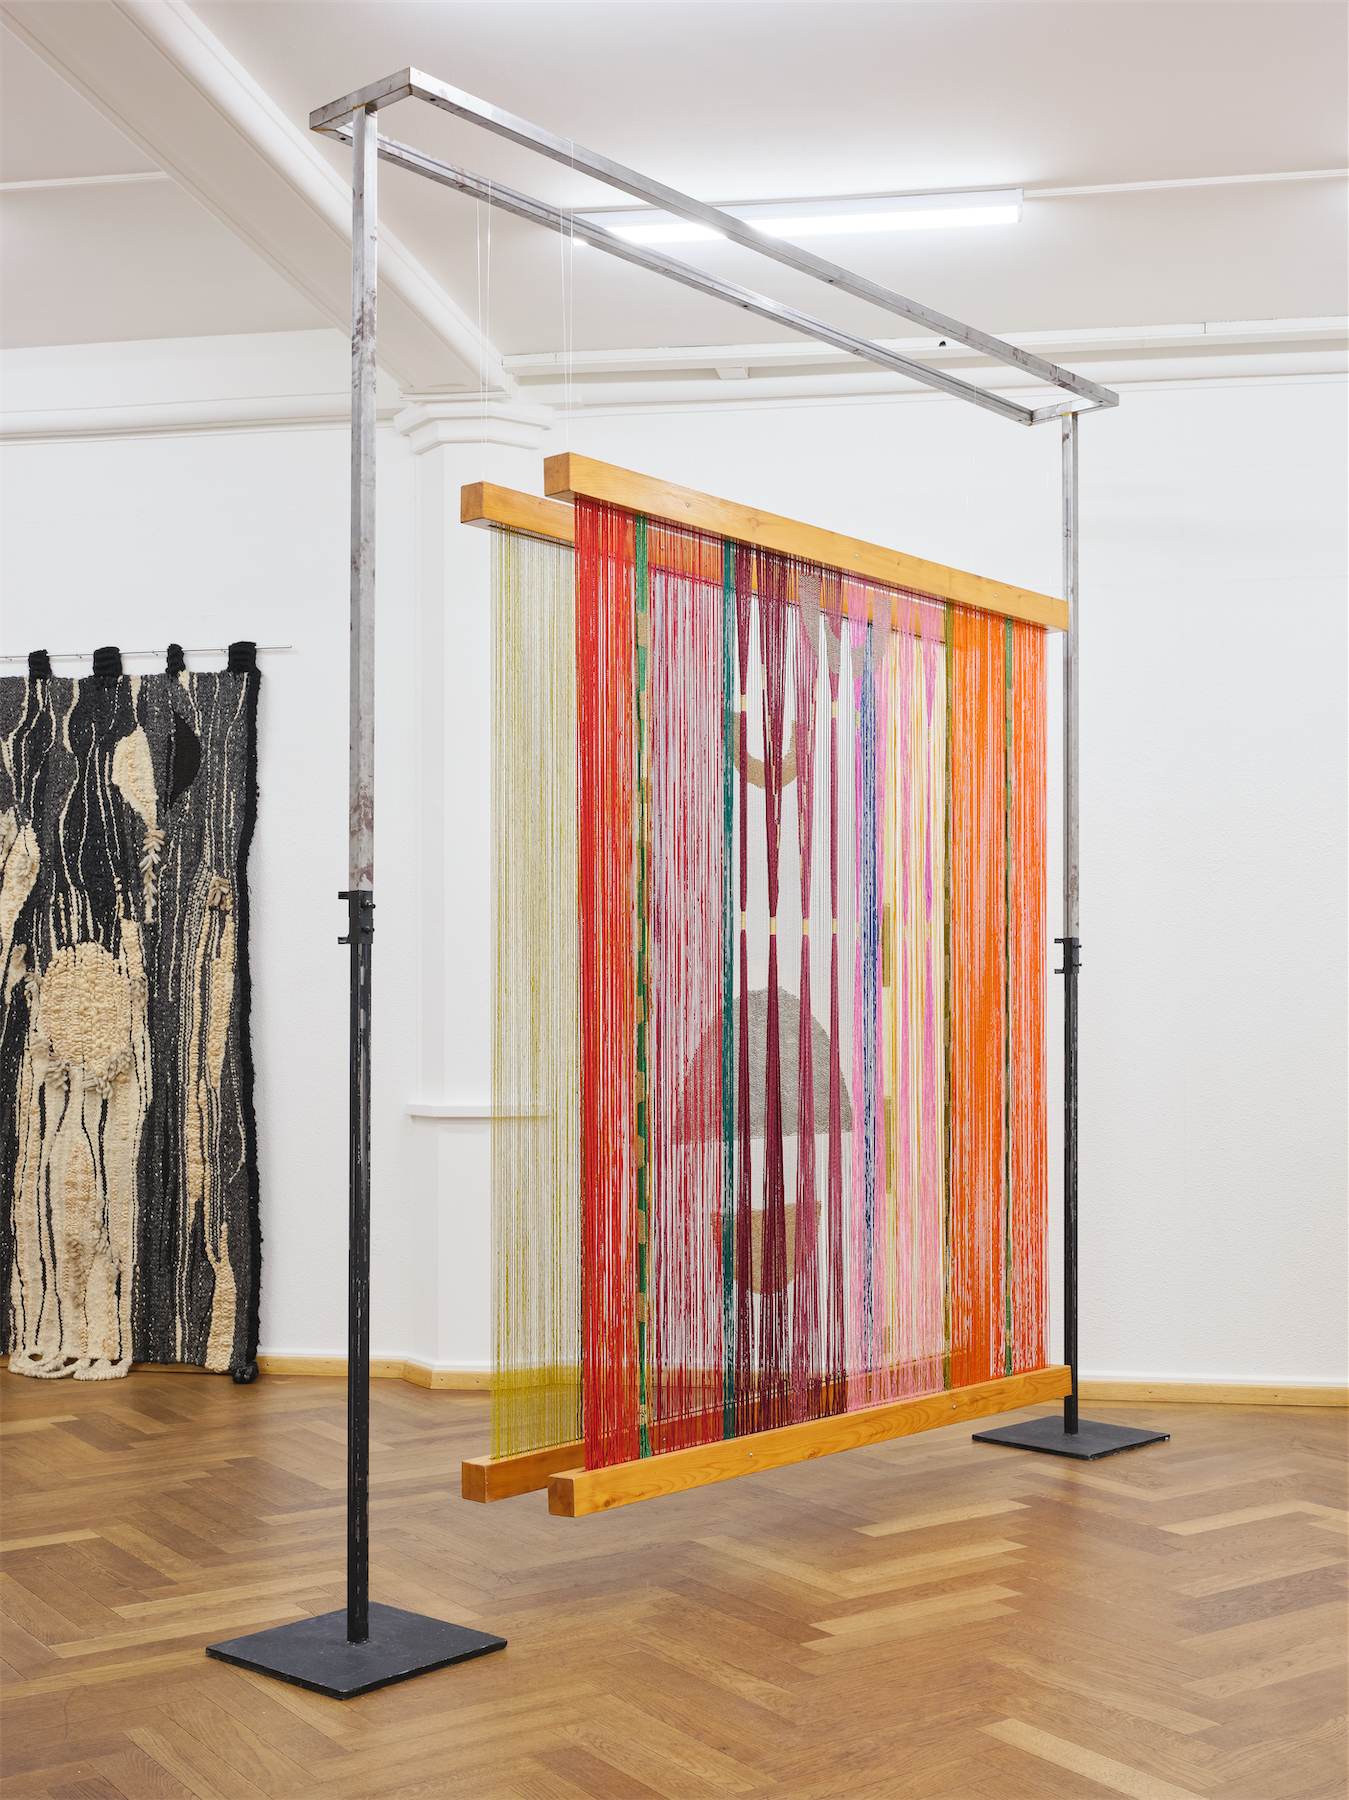 Installation views Stitches. Home as Composition, Jeanne-Odette Evard, Elsi Giauque, KRONE COURONNE, 2022. Photo: © Nicolas Delaroche Studio